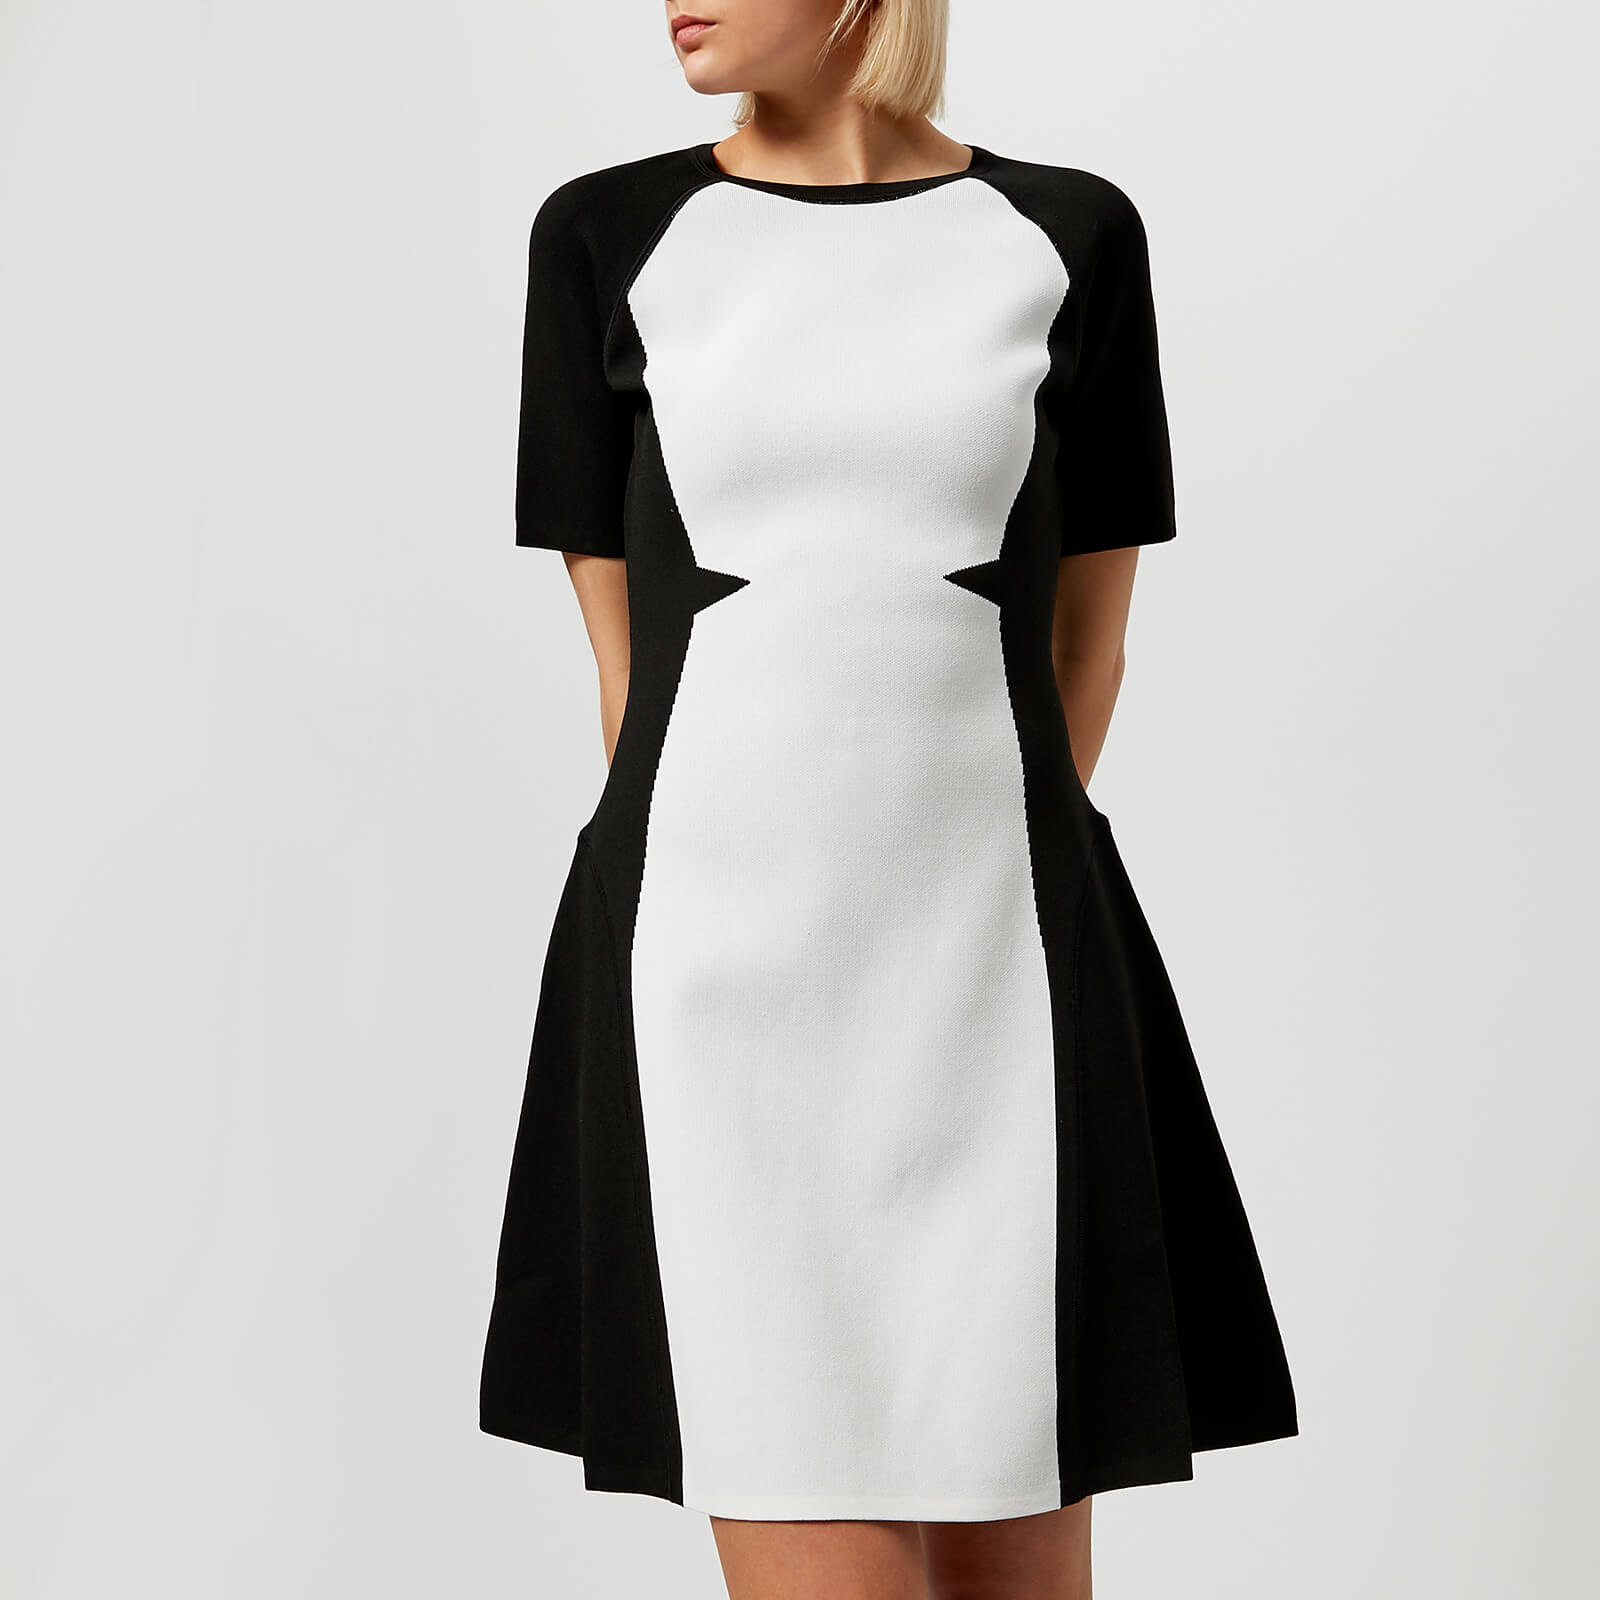 karl lagerfeld black and white dress